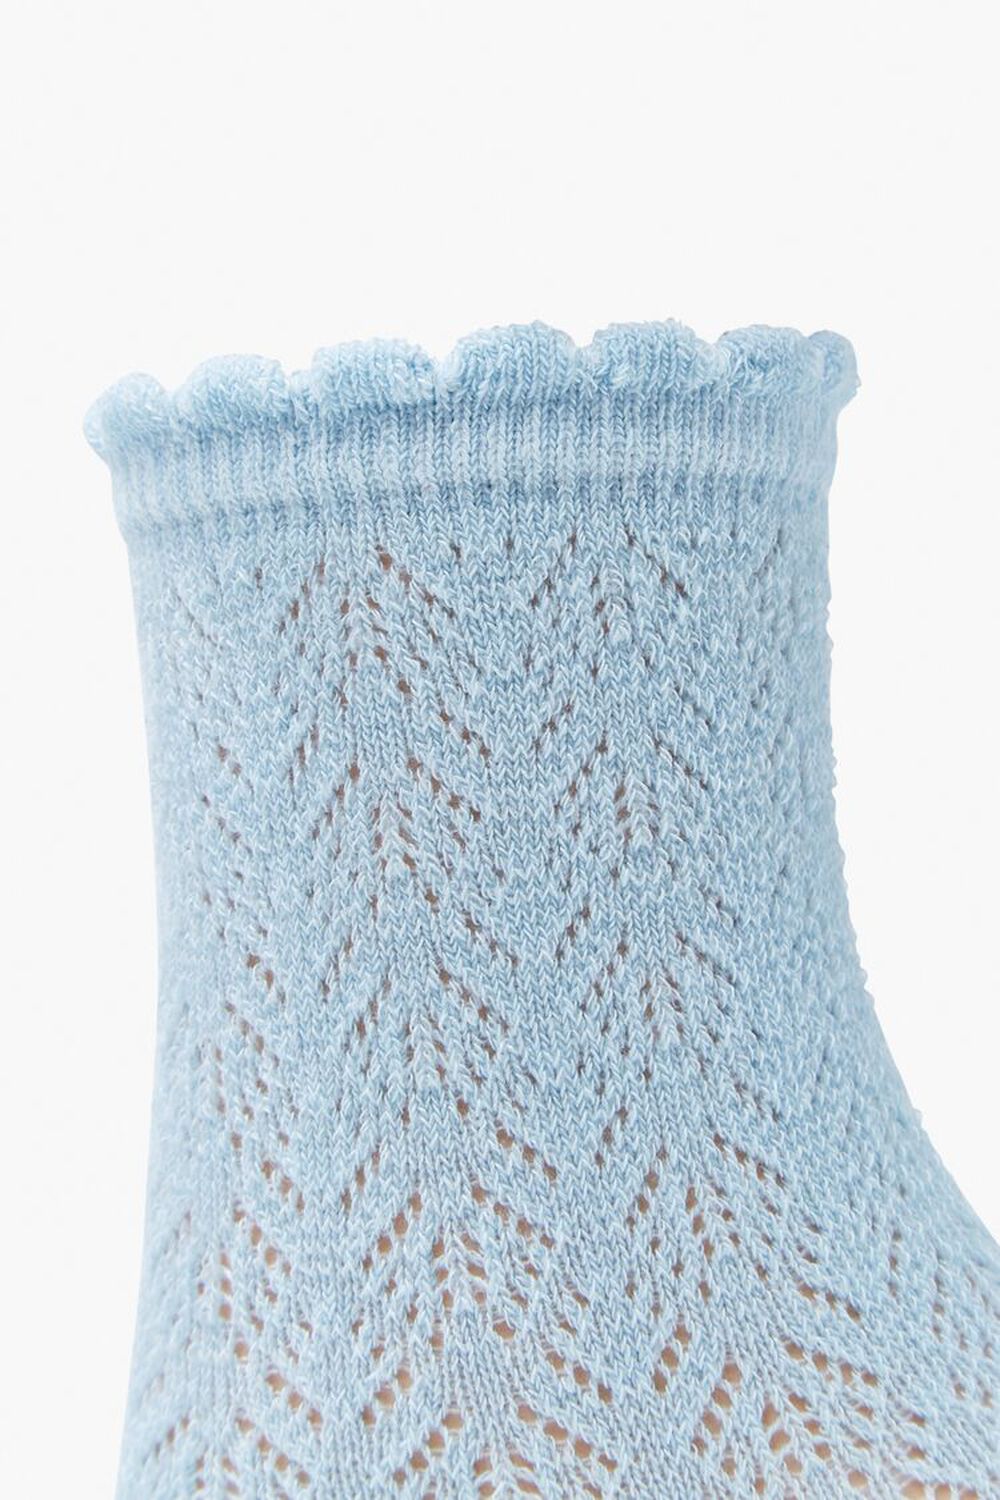 BLUE Lace Knit Crew Socks, image 2